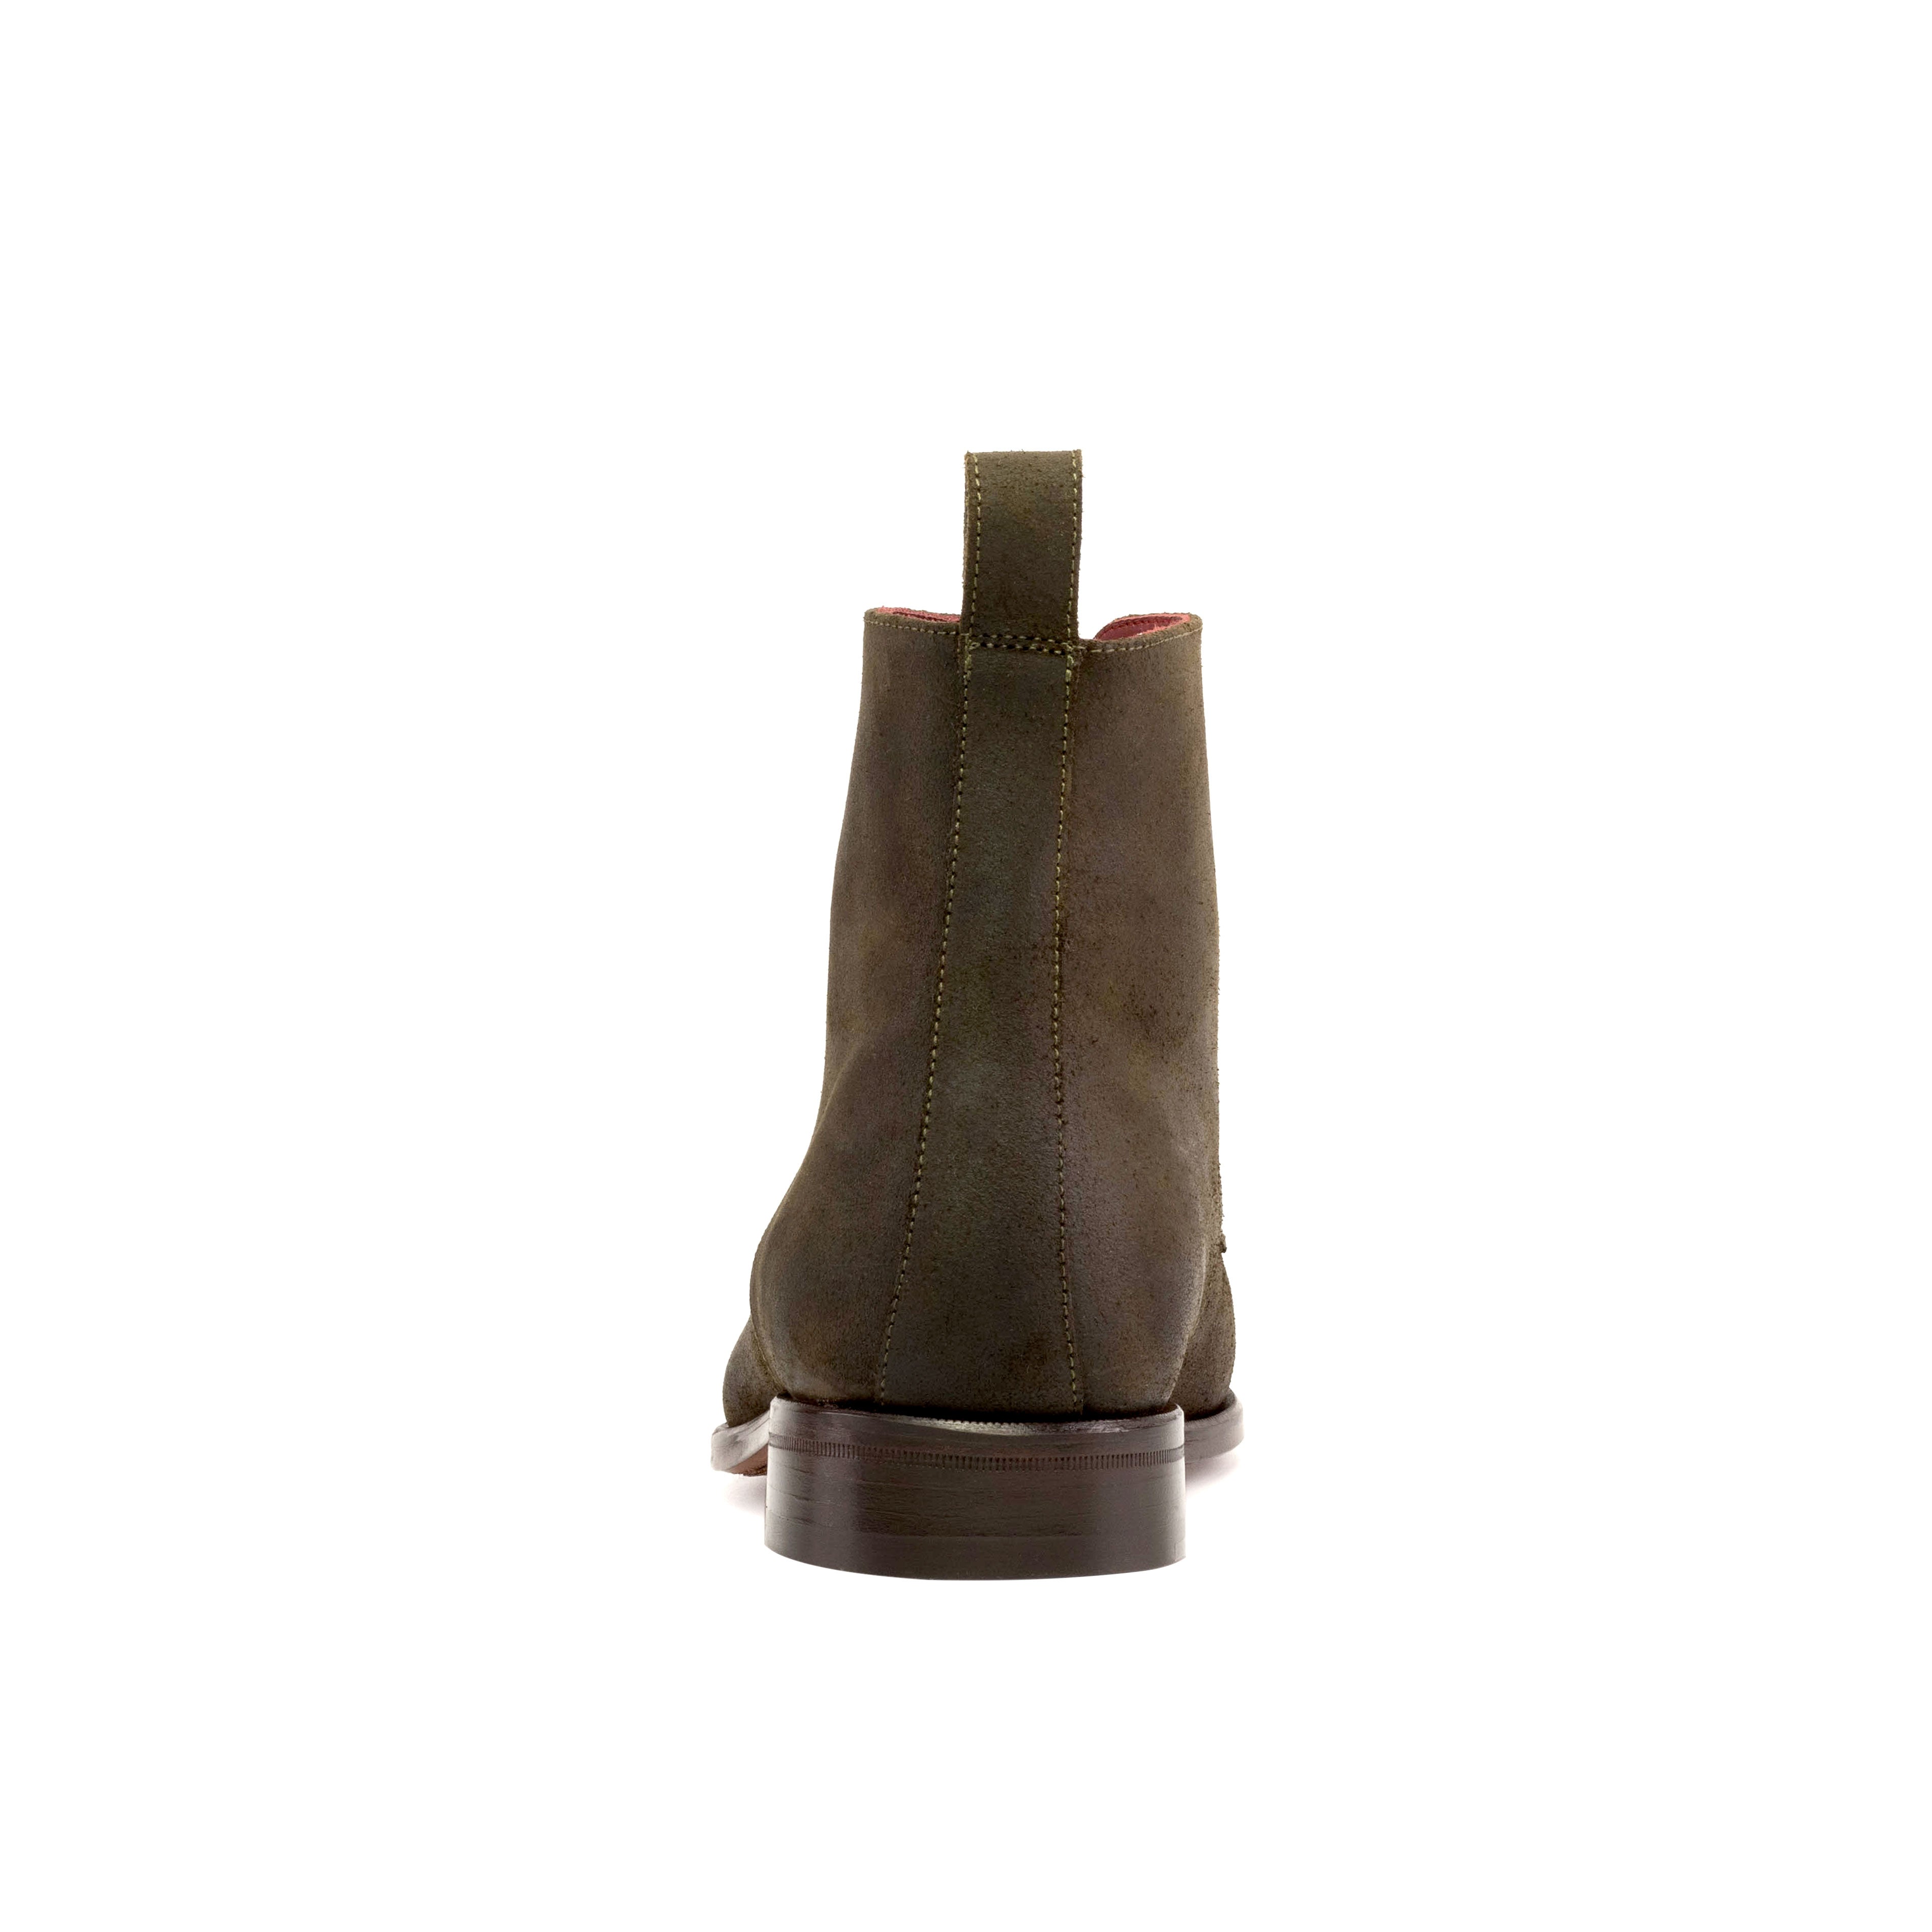 AN Captoe Boot (Waxed/Olive)